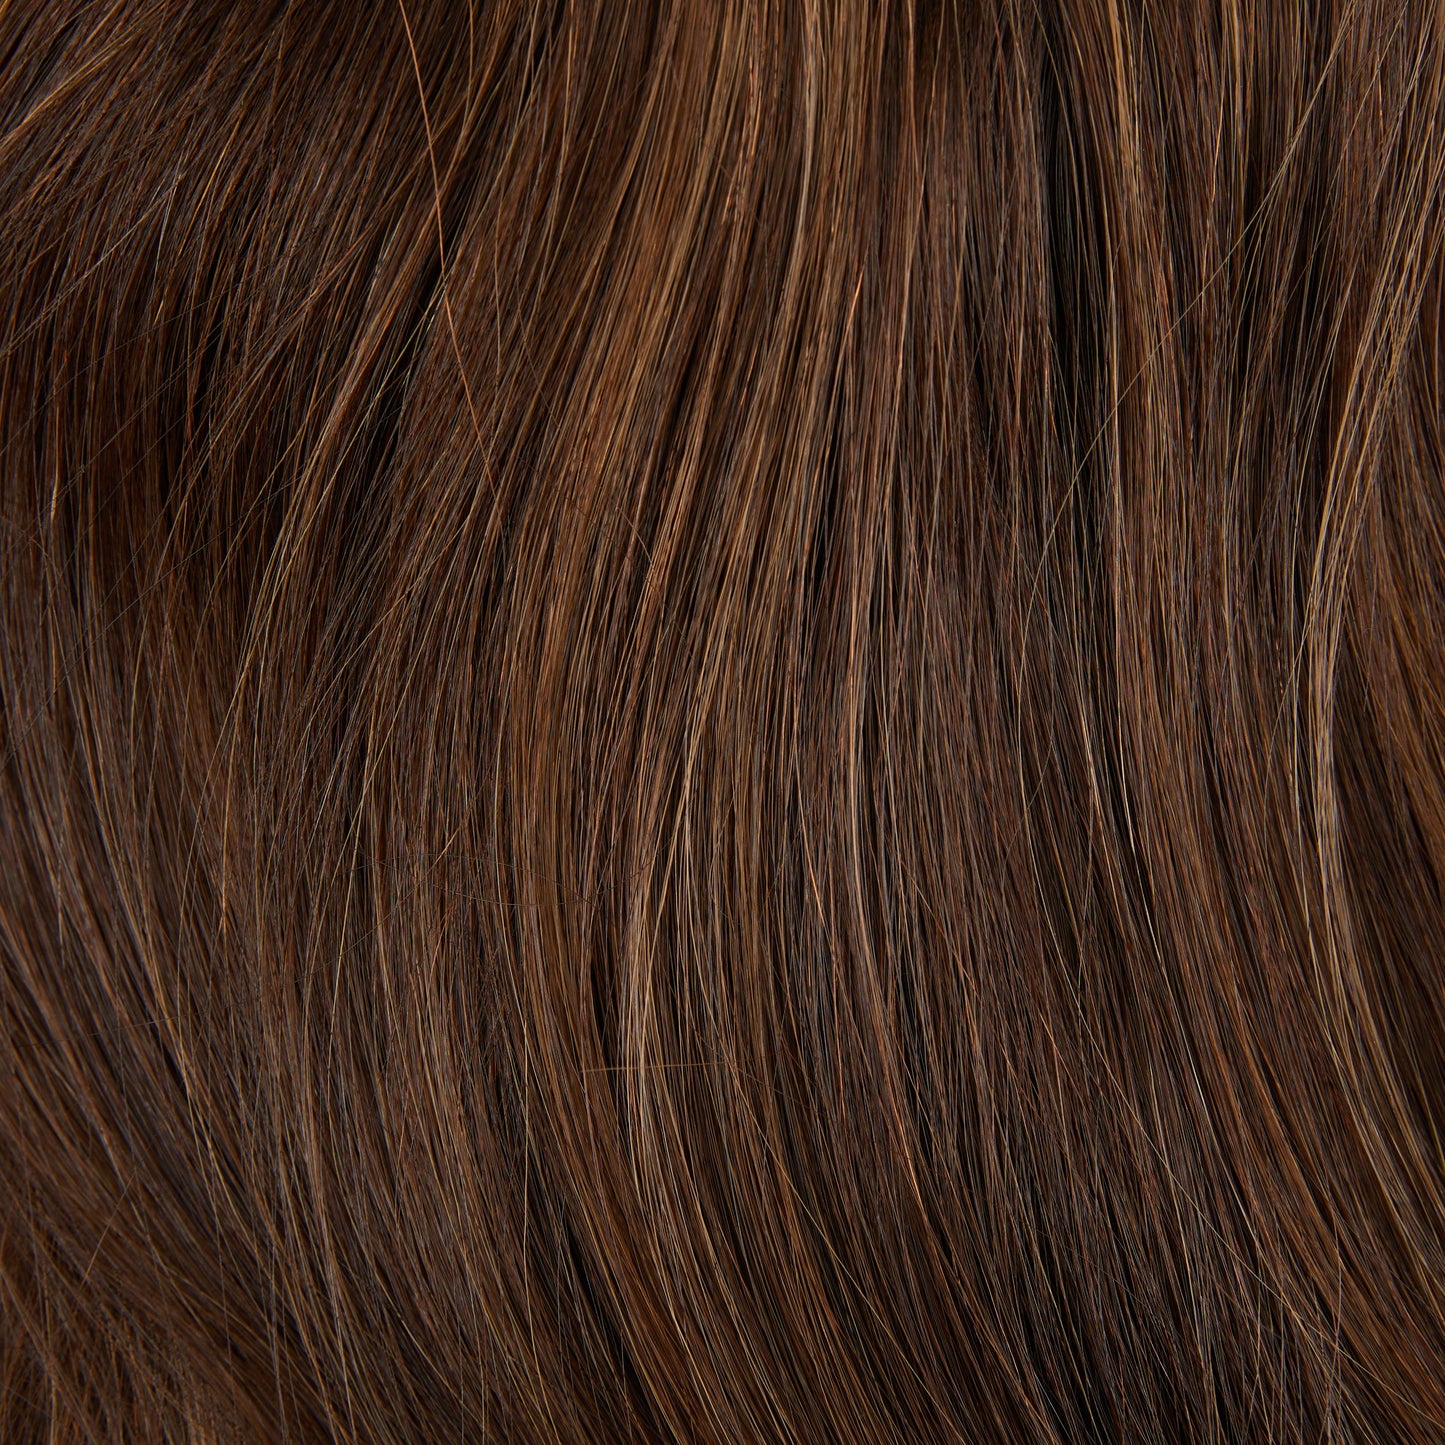 Medium Brown W/ Blond Highlights #12-4-6 Lace Wig